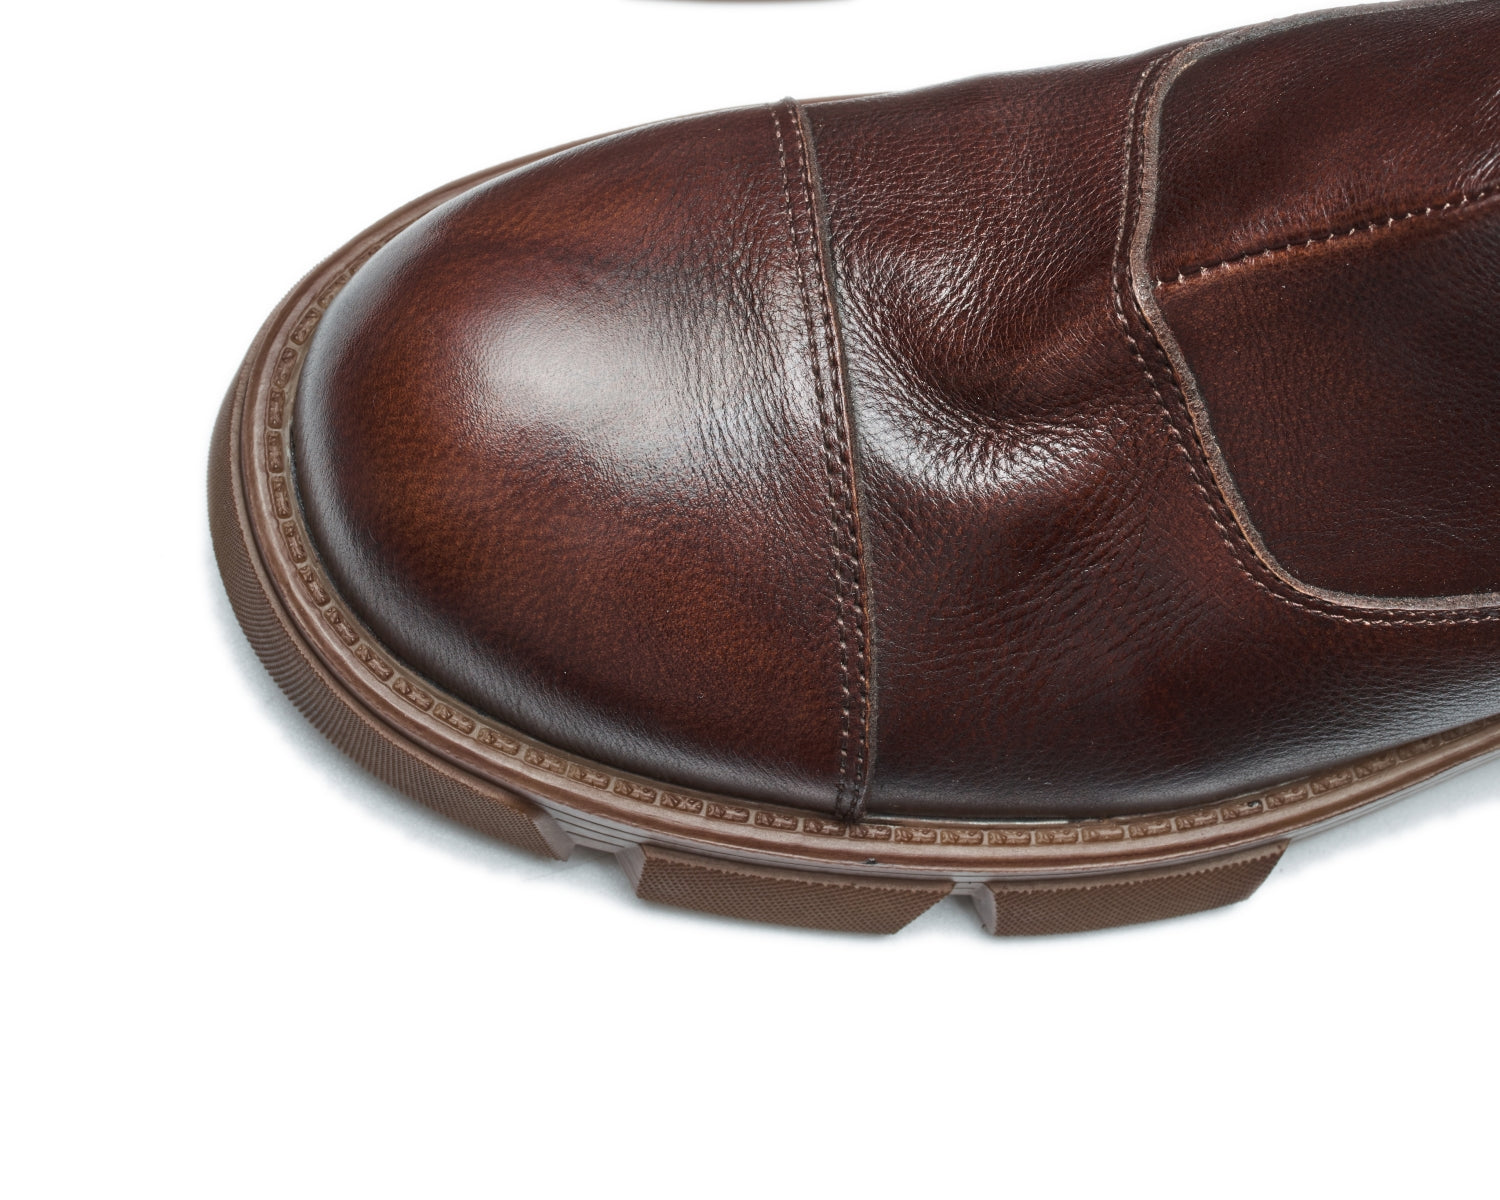 Men's high-top side zip Doc Martens style boots4